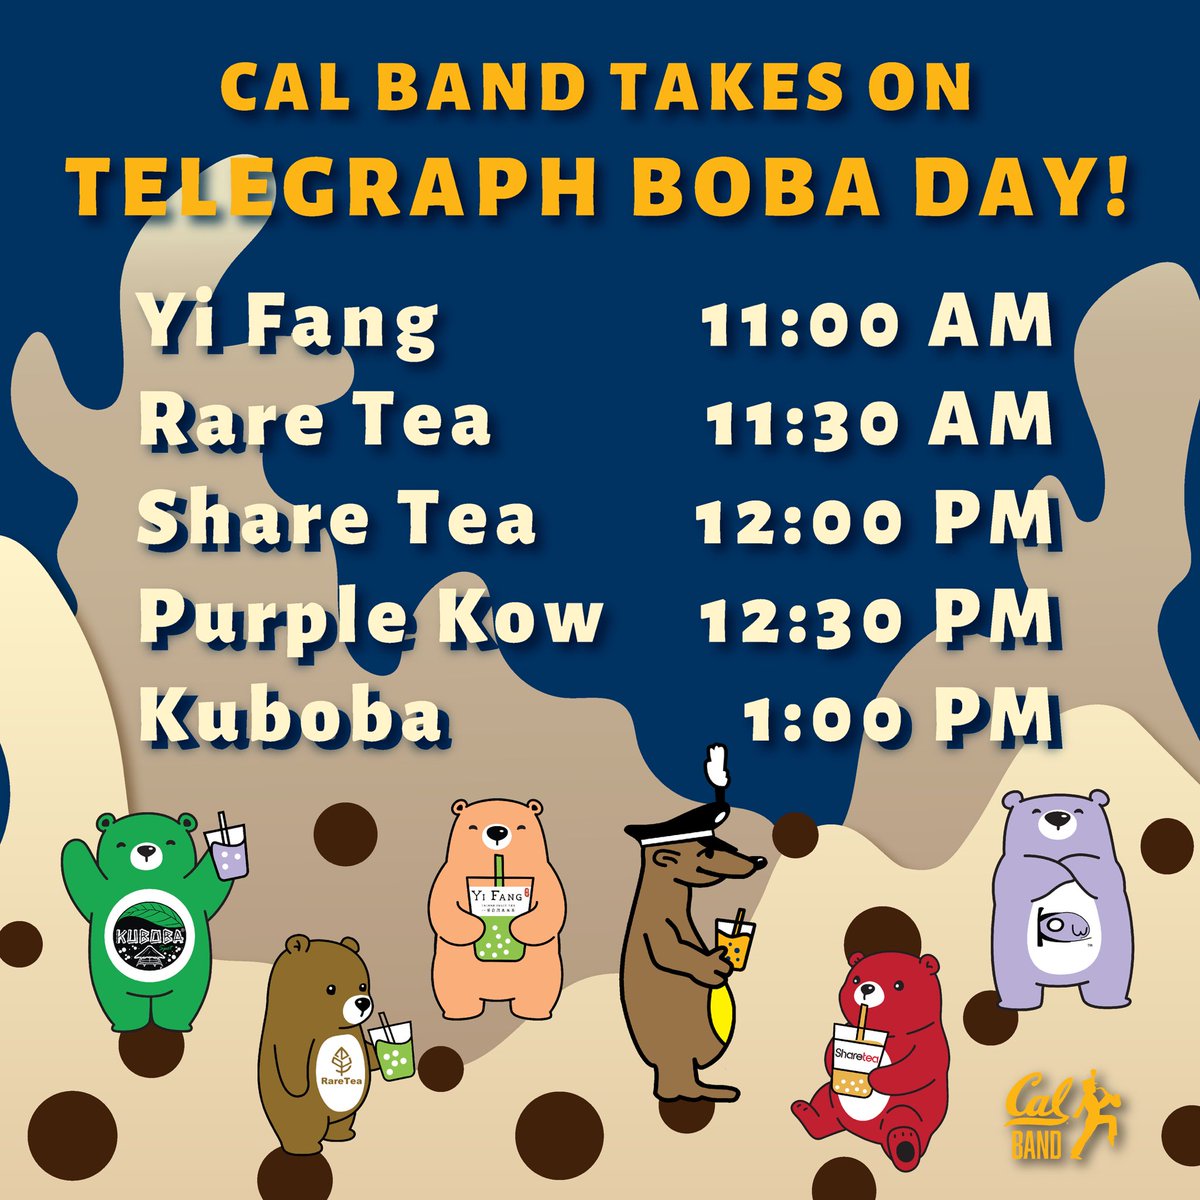 Who wants boba??🧋Catch us performing at various boba shops tomorrow for Telegraph Boba Day! 😋 #CalBand #Boba #UCBerkeley #TelegraphBobaDay #Cal #GoBears #BubbleTea #Telegraph